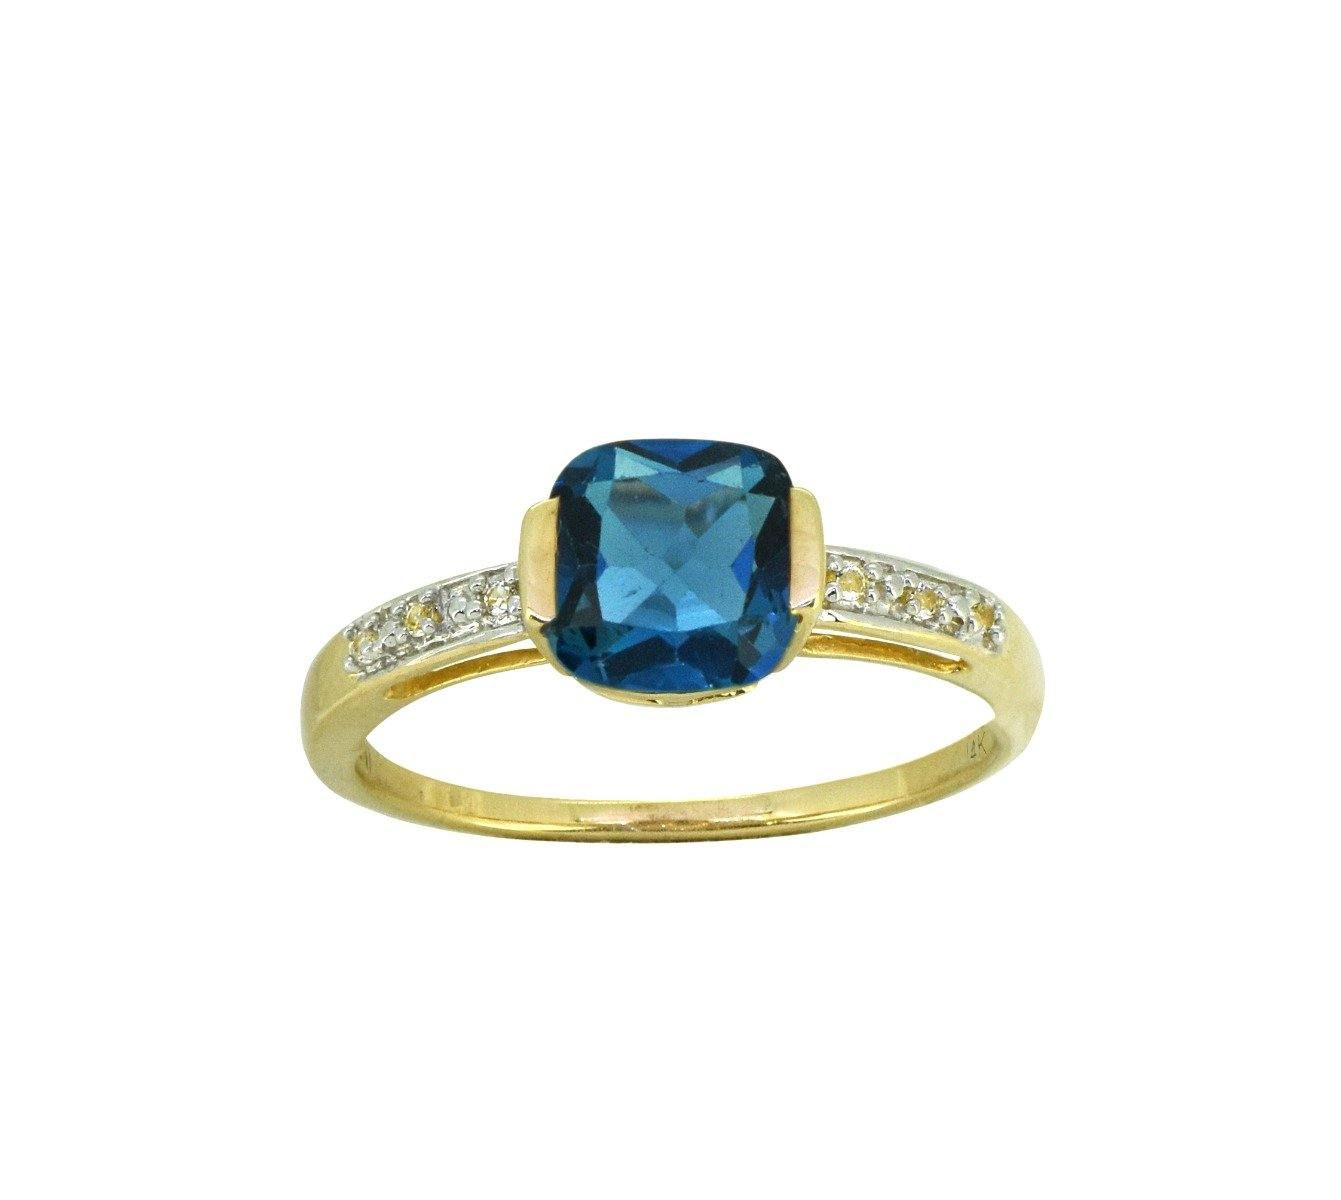 1.69 Ct. London Blue Topaz Solid 14k Yellow Gold Ring Jewelry - YoTreasure